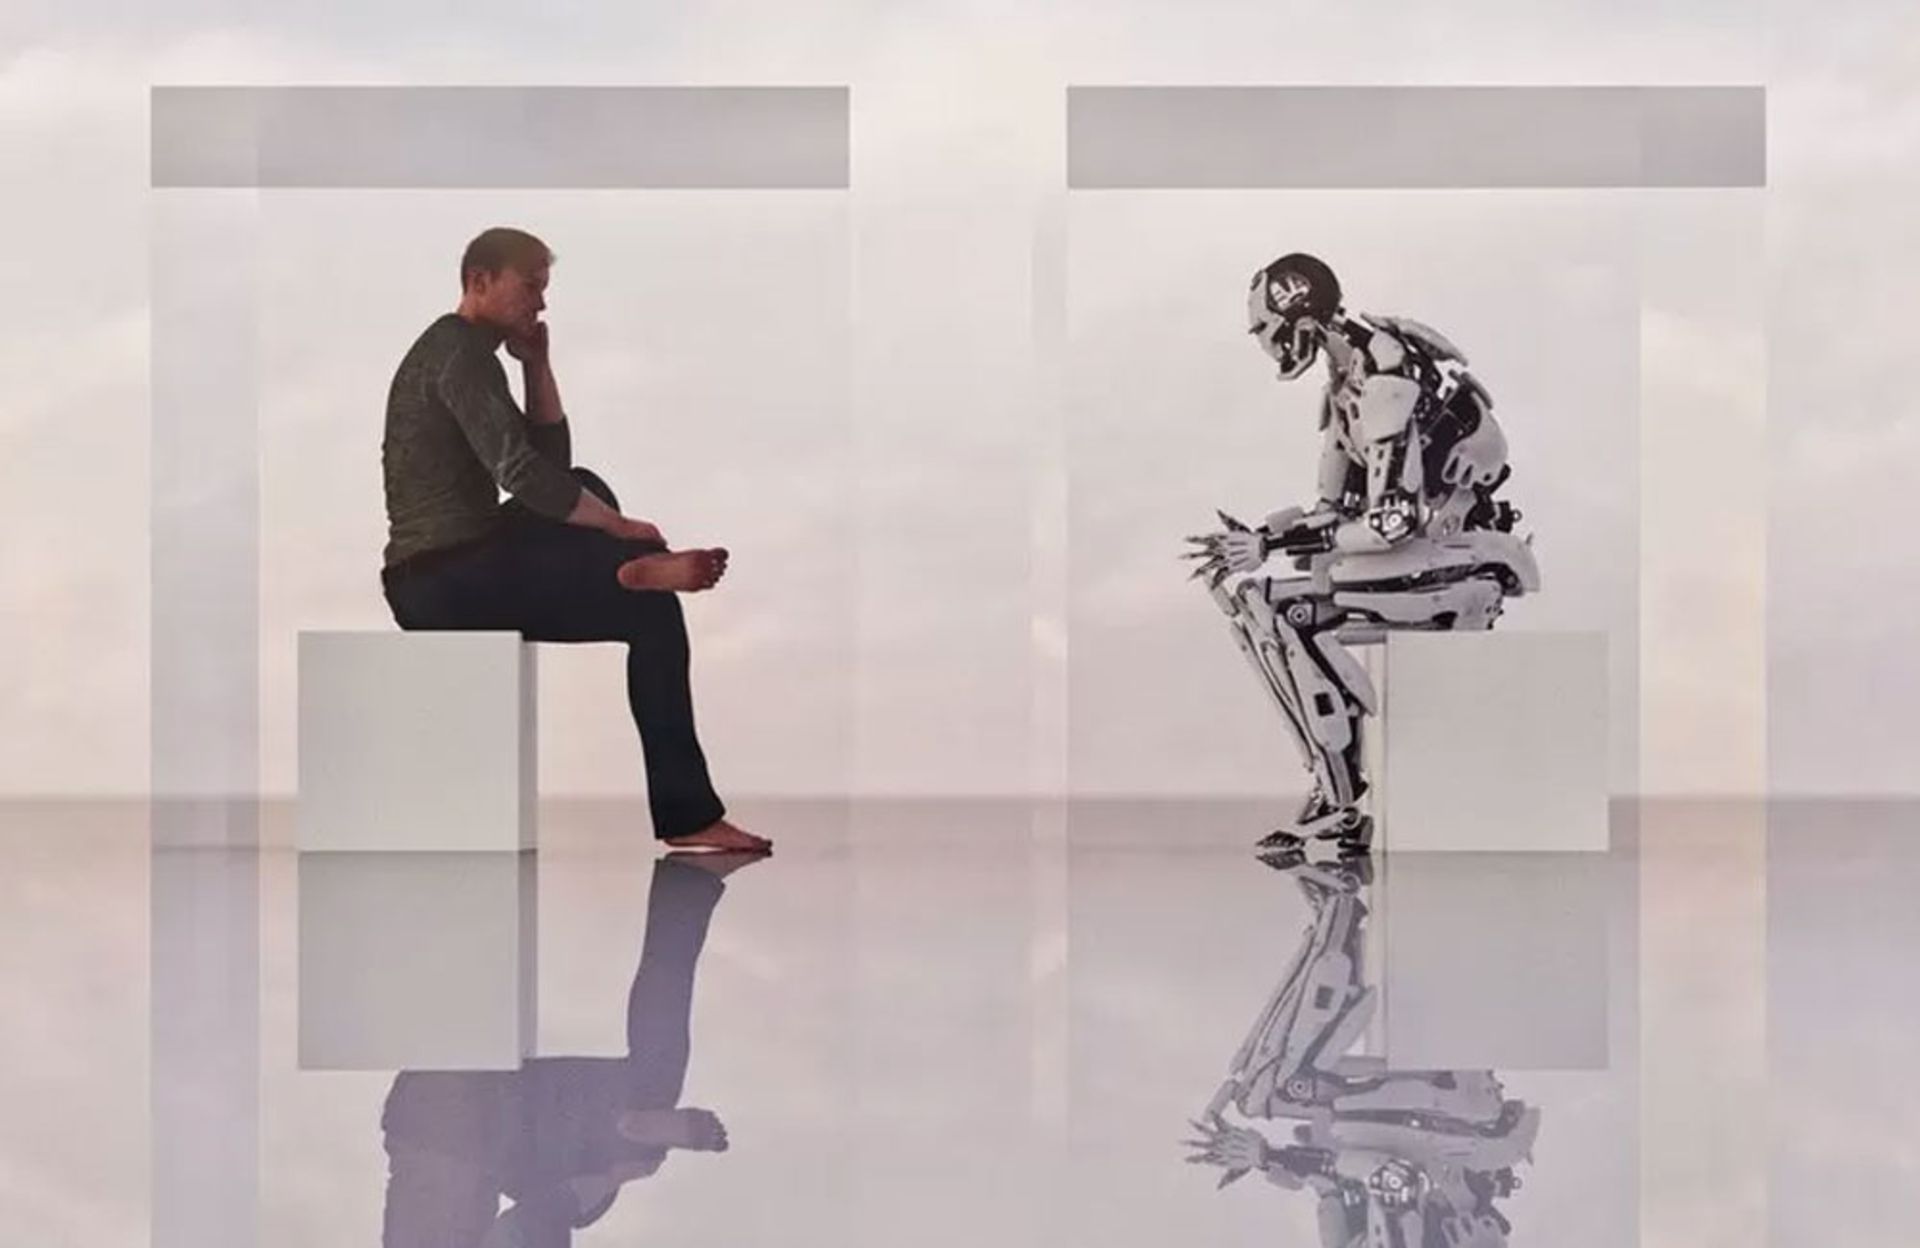 تقابل ربات و انسان